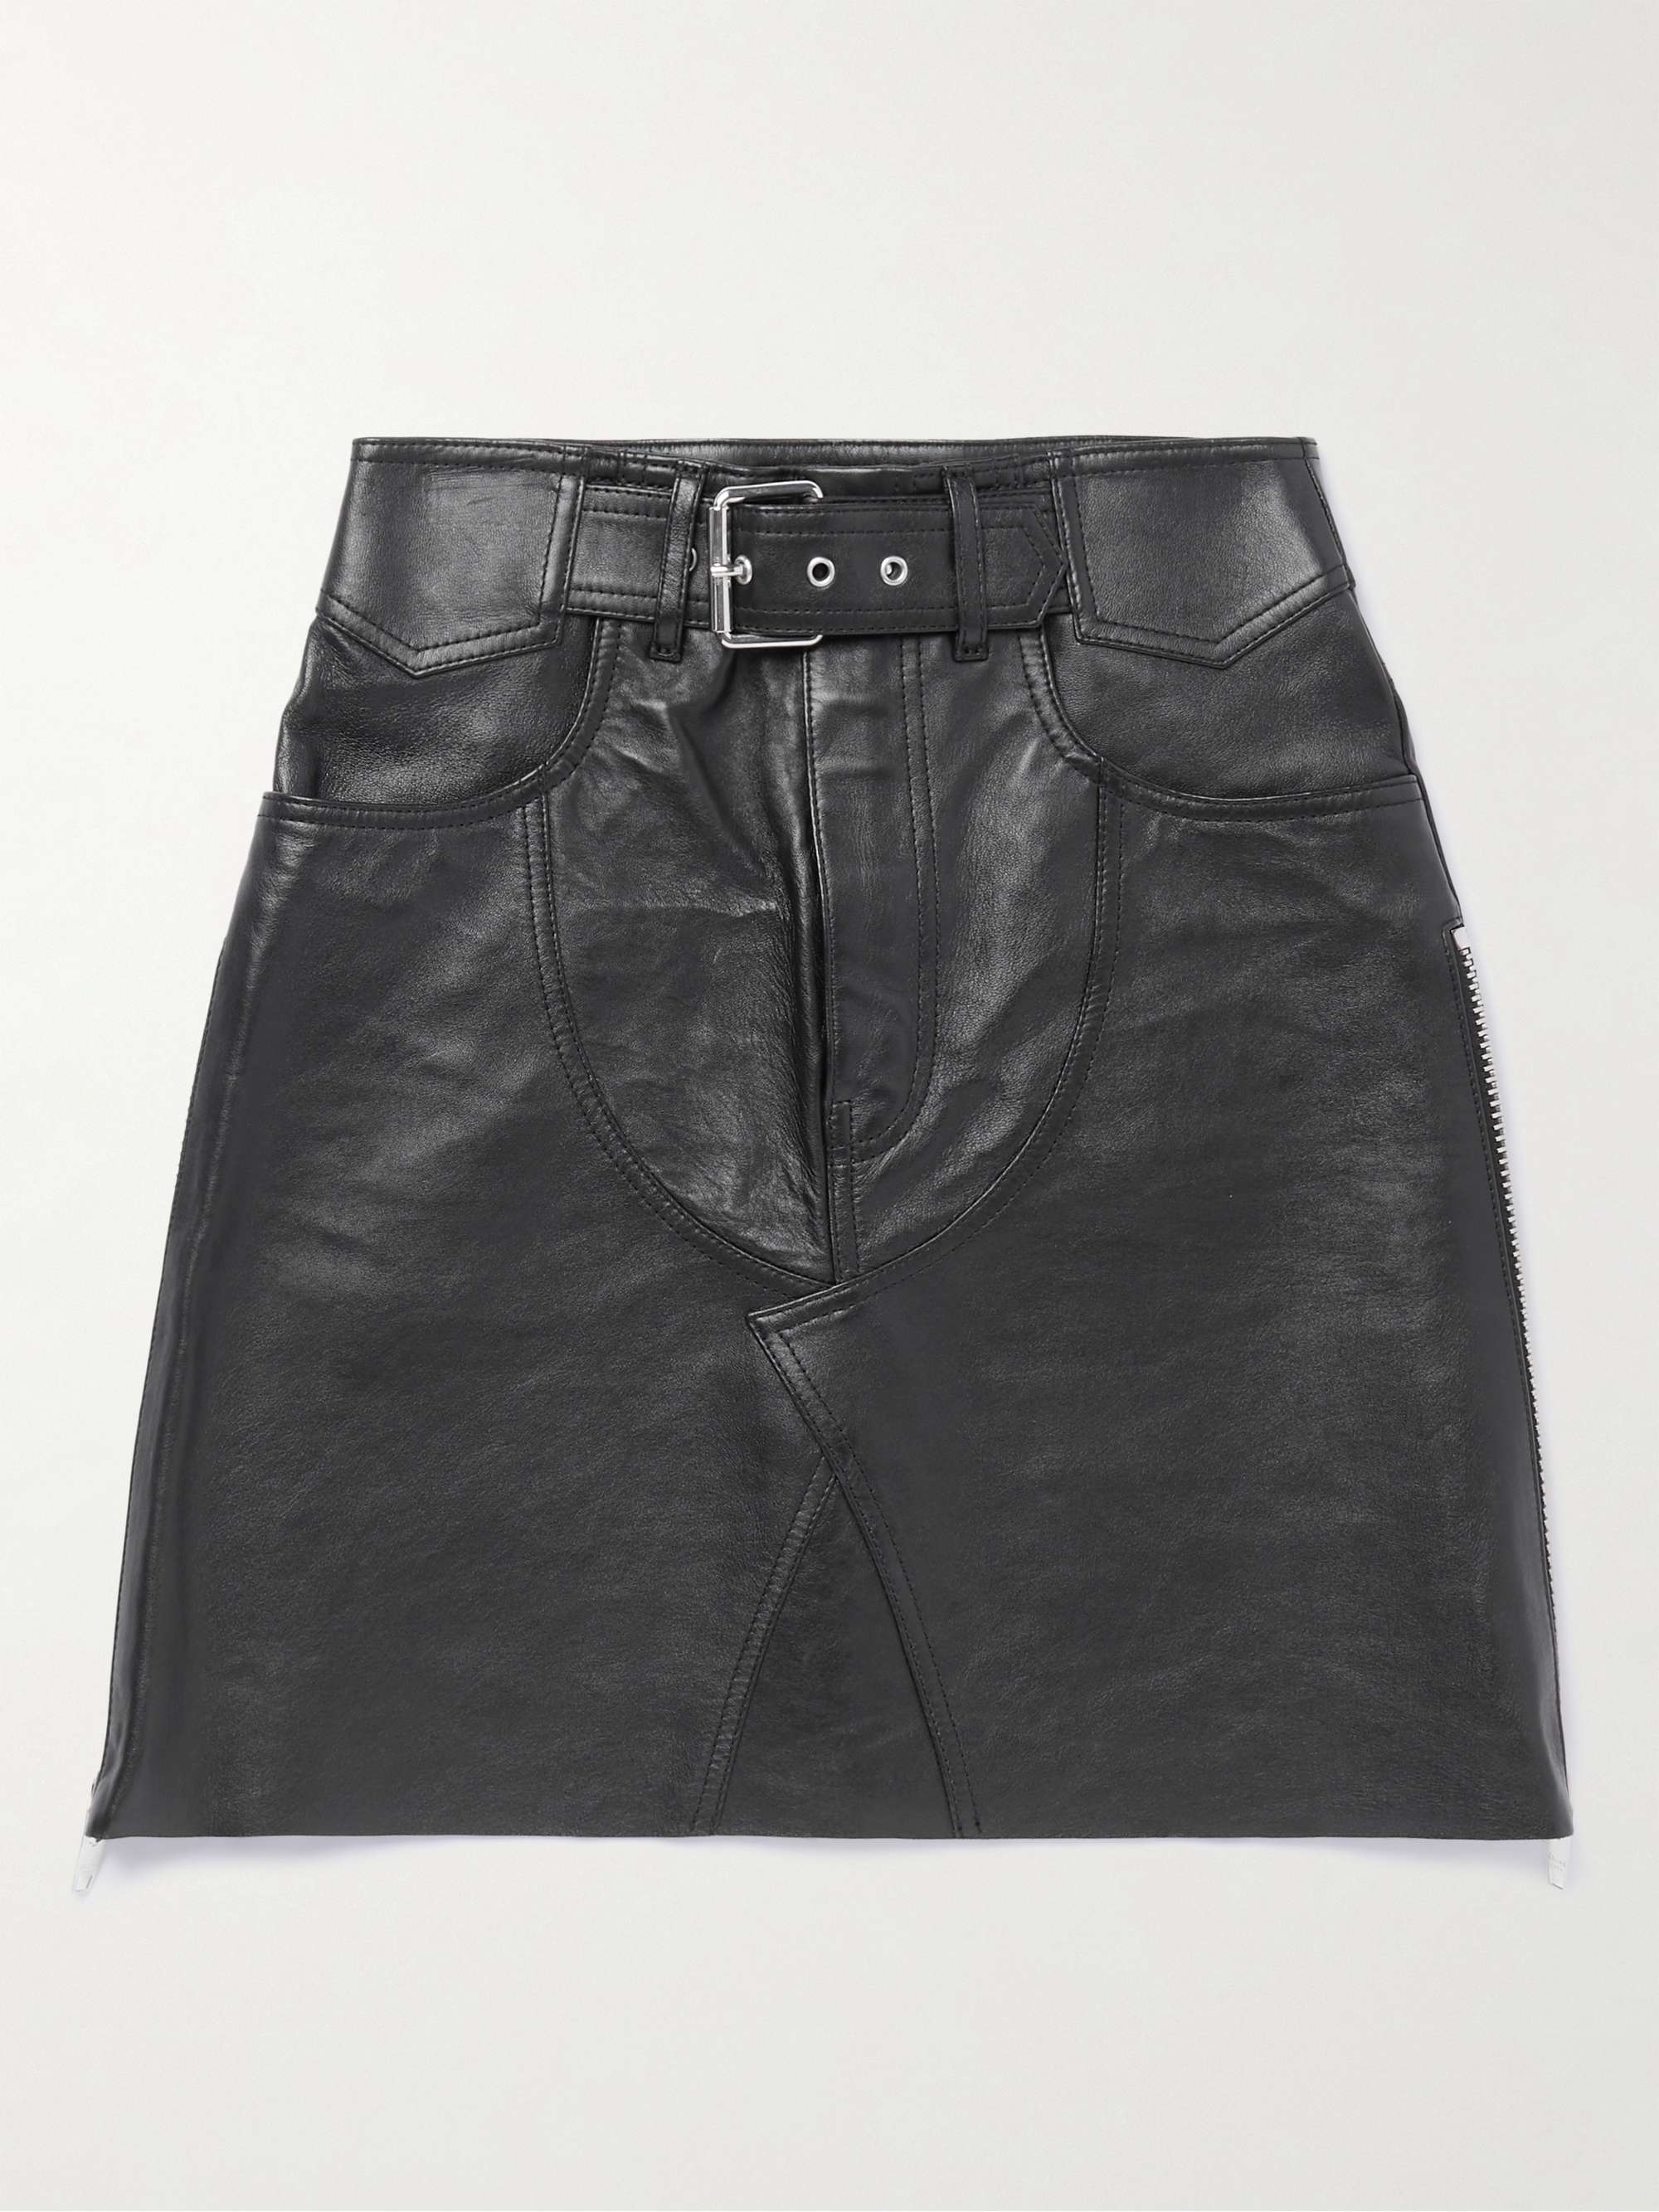 CELINE HOMME Buckled Leather Skirt